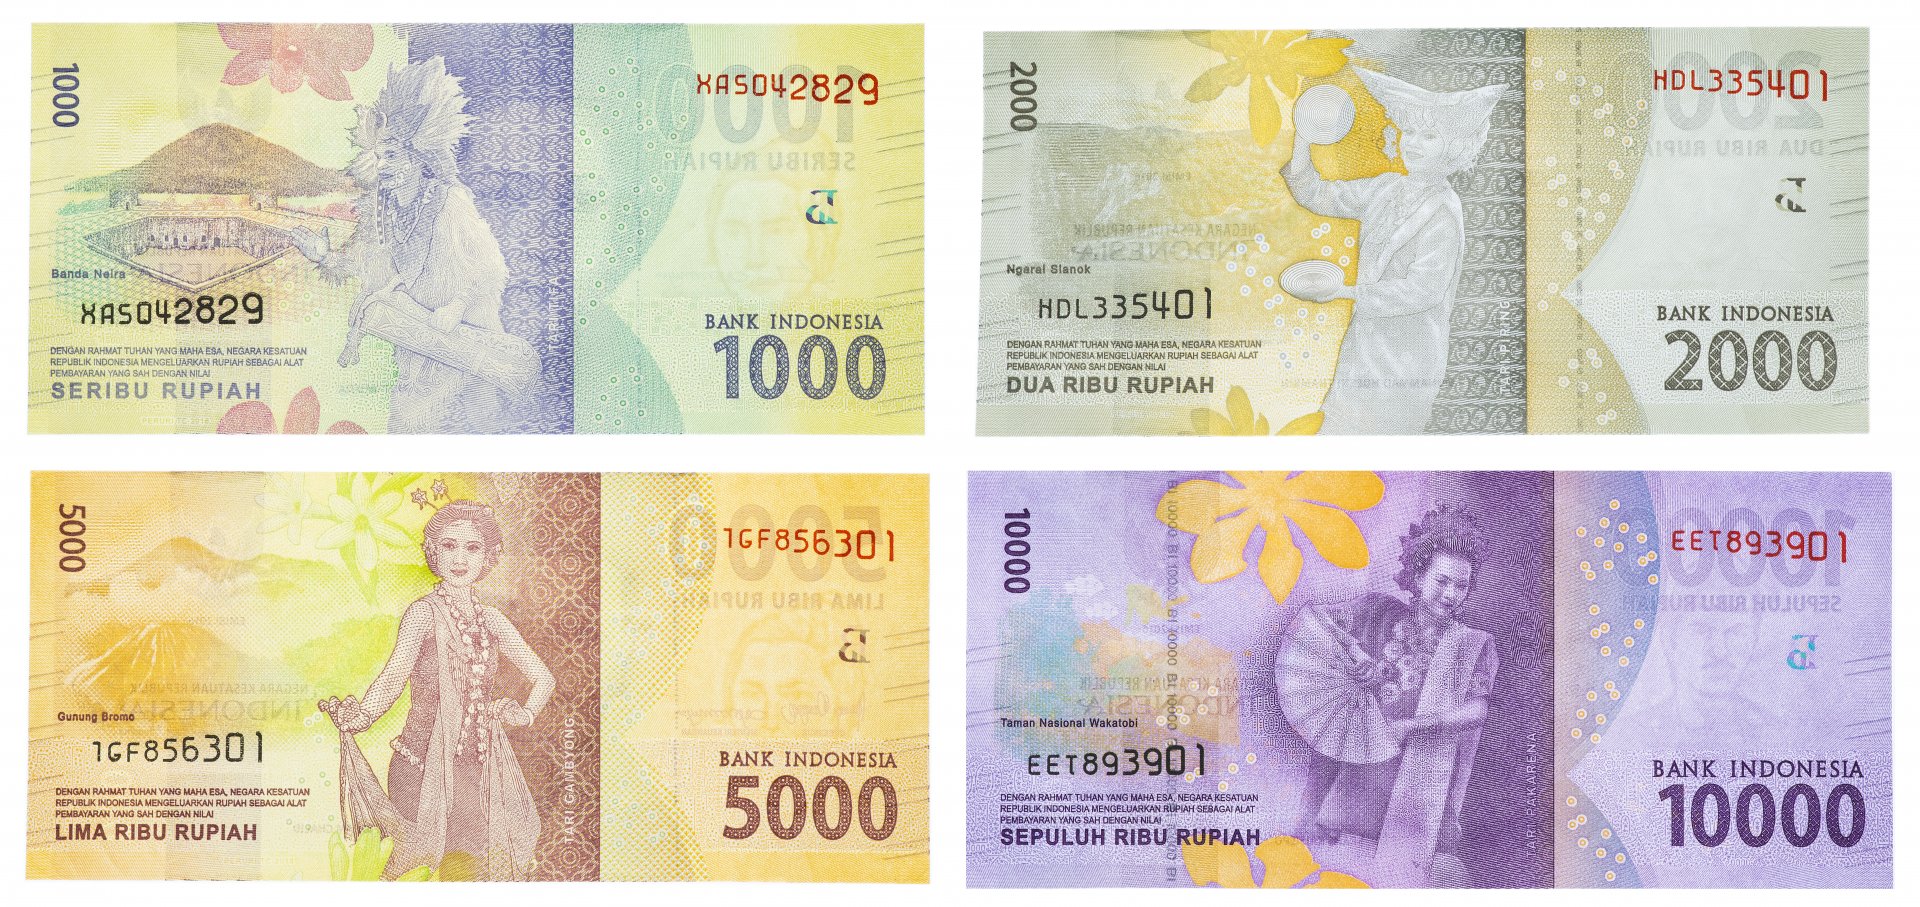 Idr в рублях. Индонезийская рупия банкноты. 10000 Индонезийских рупий. Индонезия набор 2016 банкноты. Индонезия 1000 рупий 2016.